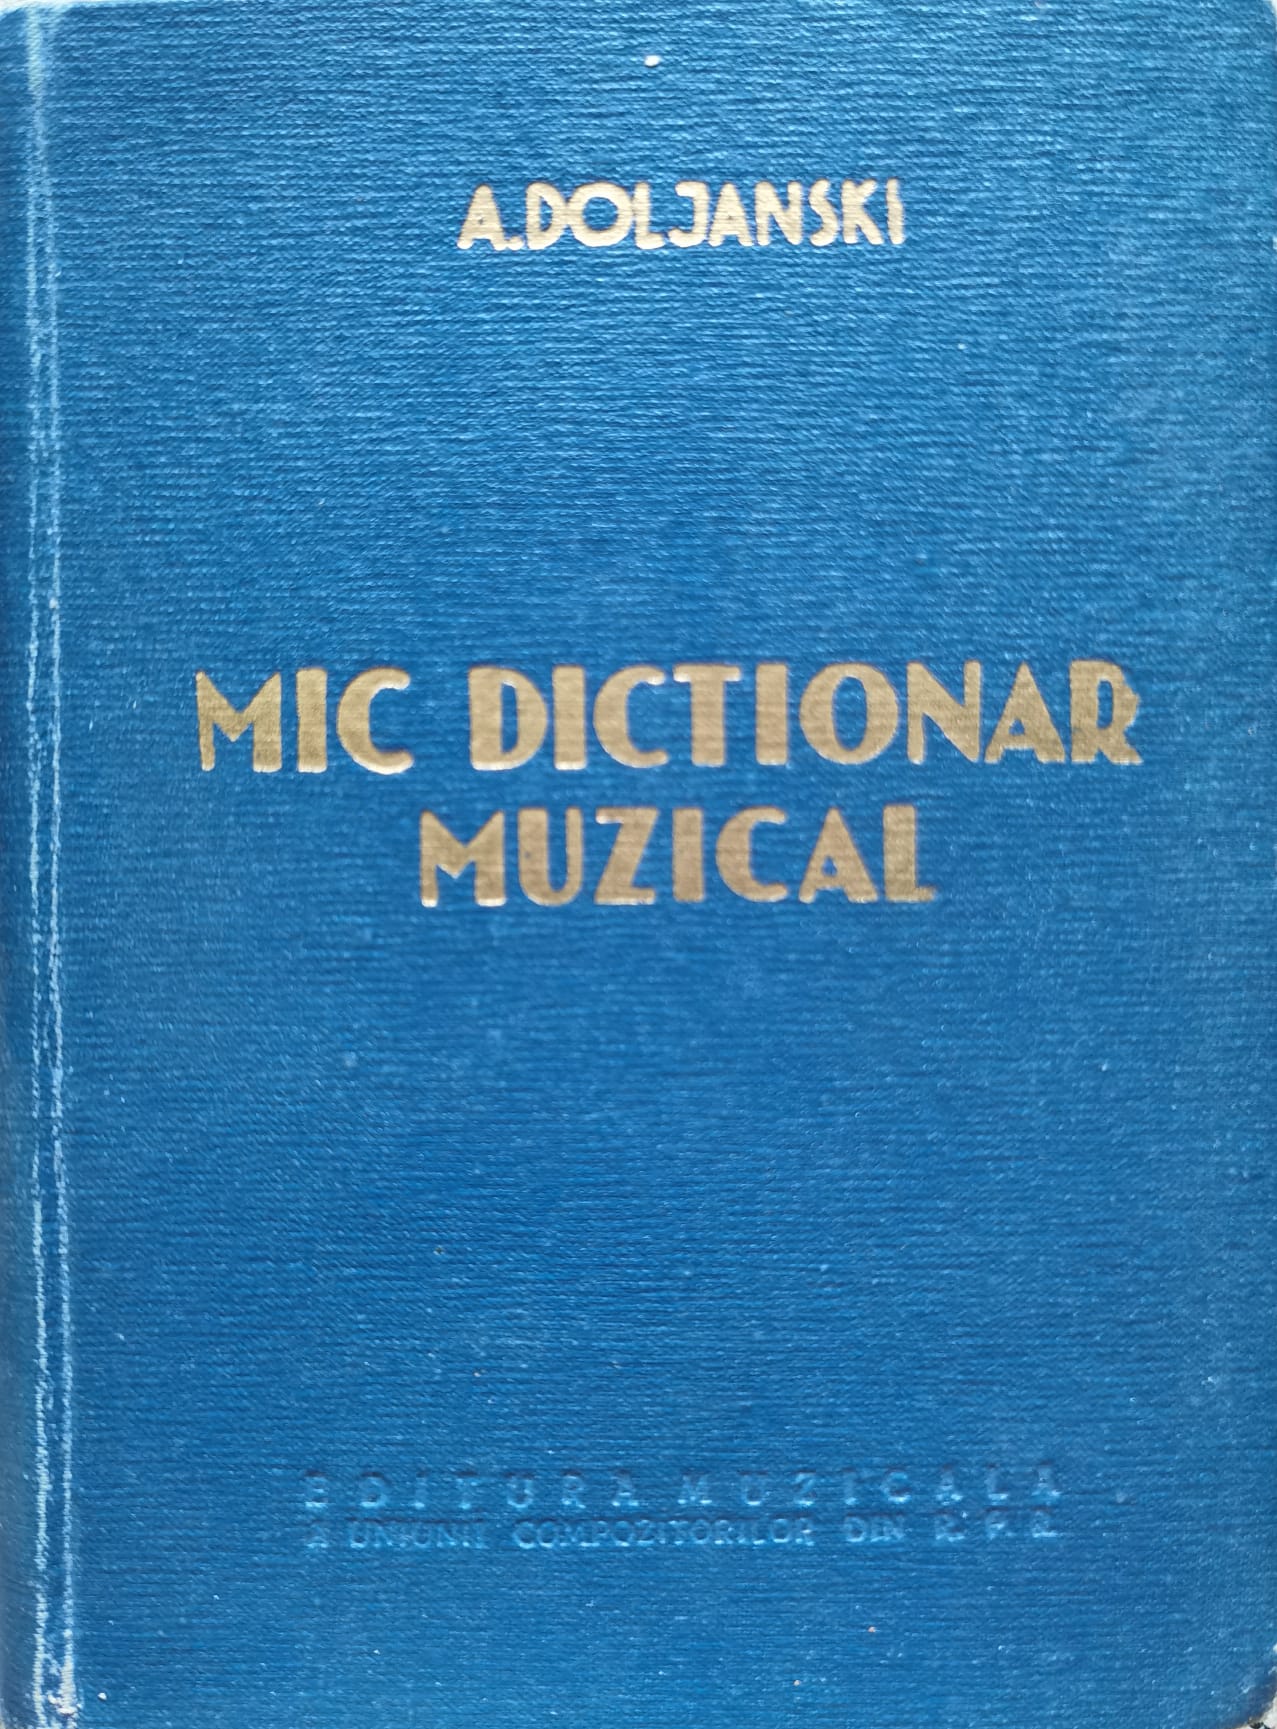 mic dictionar muzical                                                                                a. doljanski                                                                                        